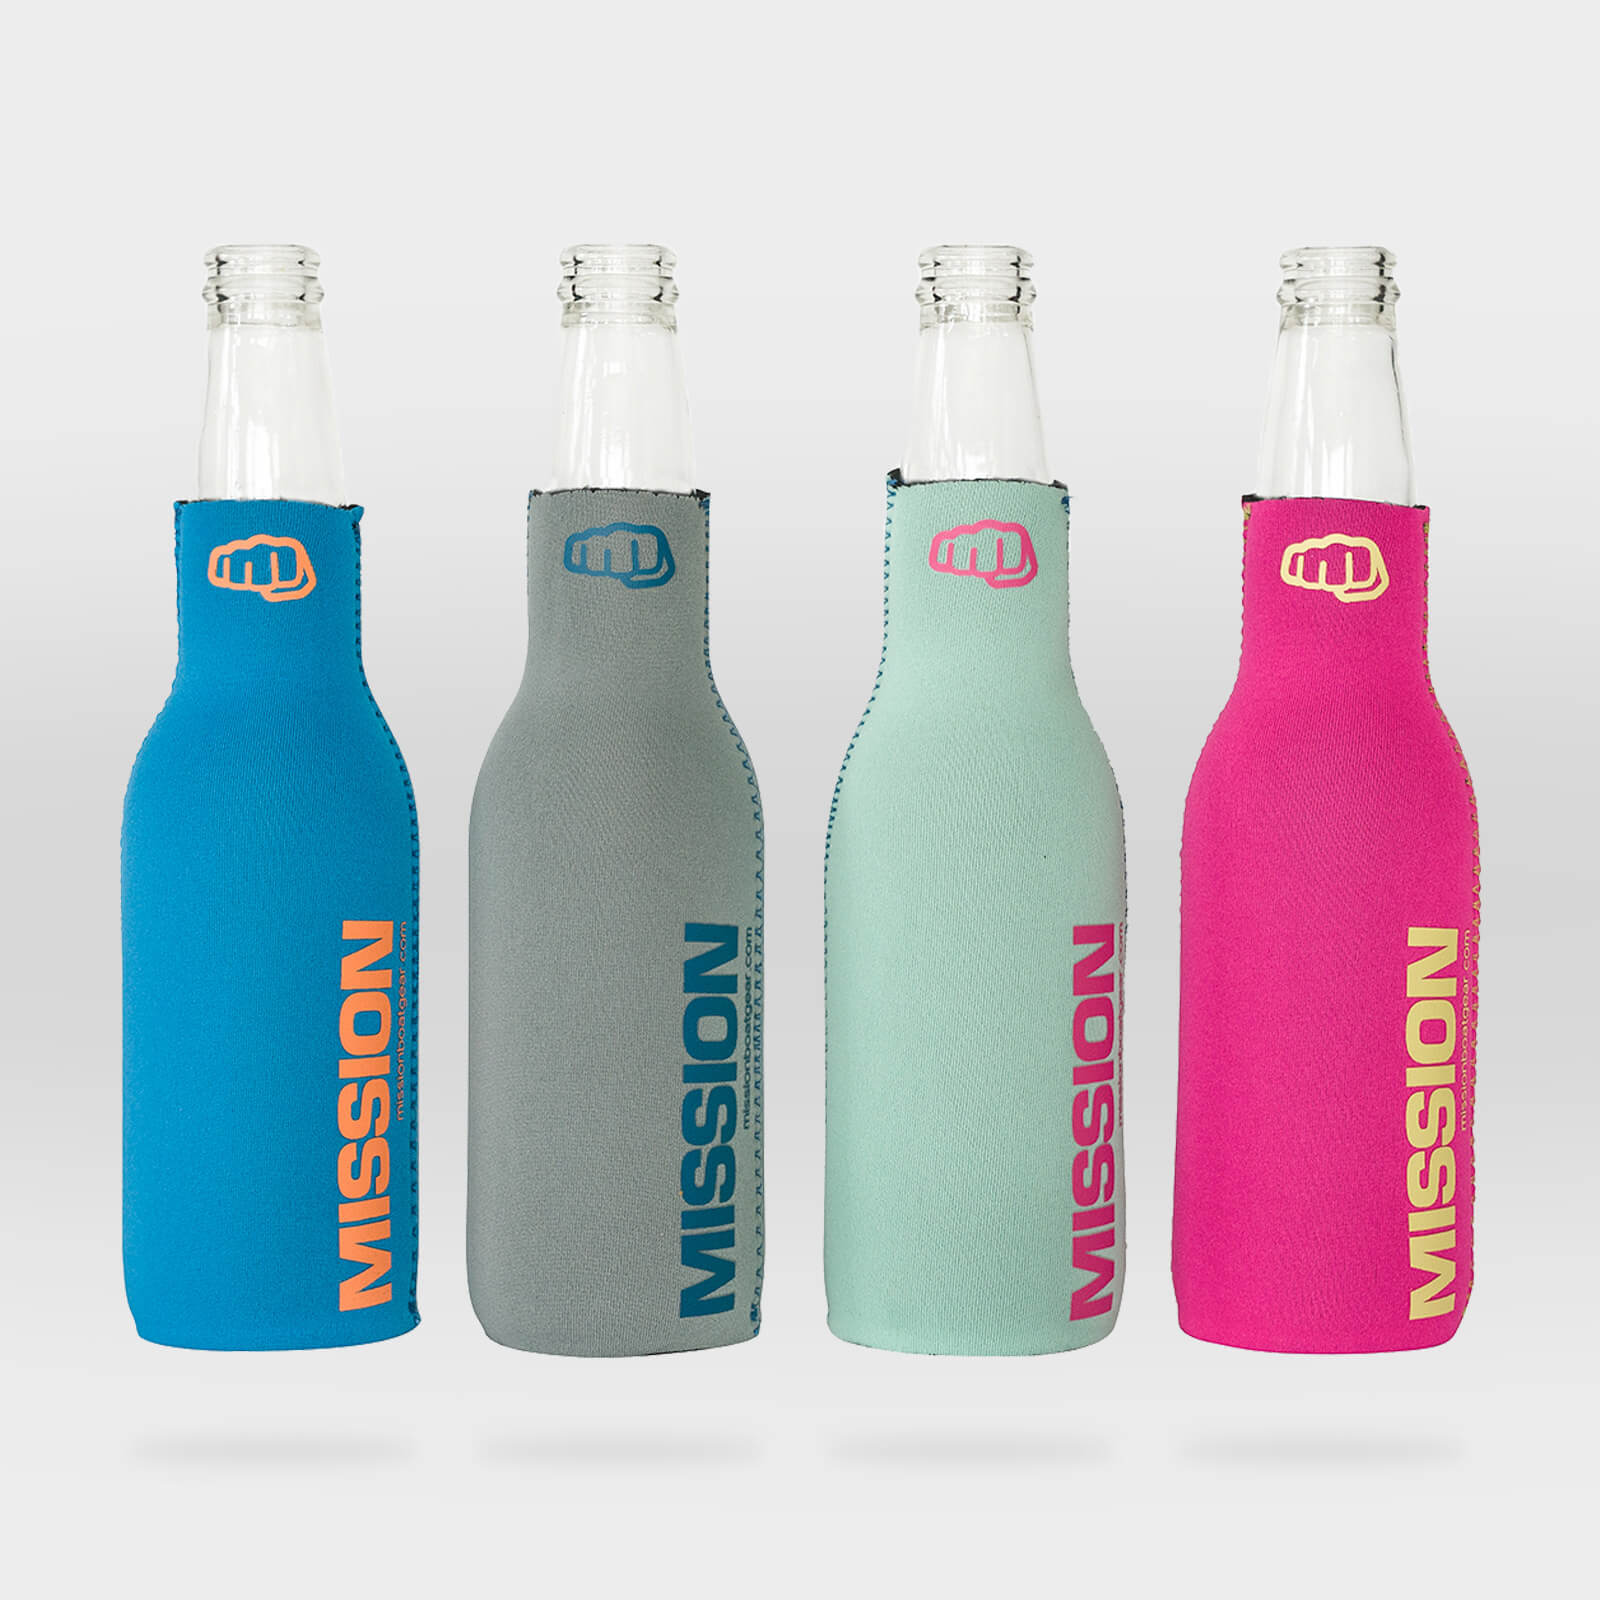 mission bottle coolers